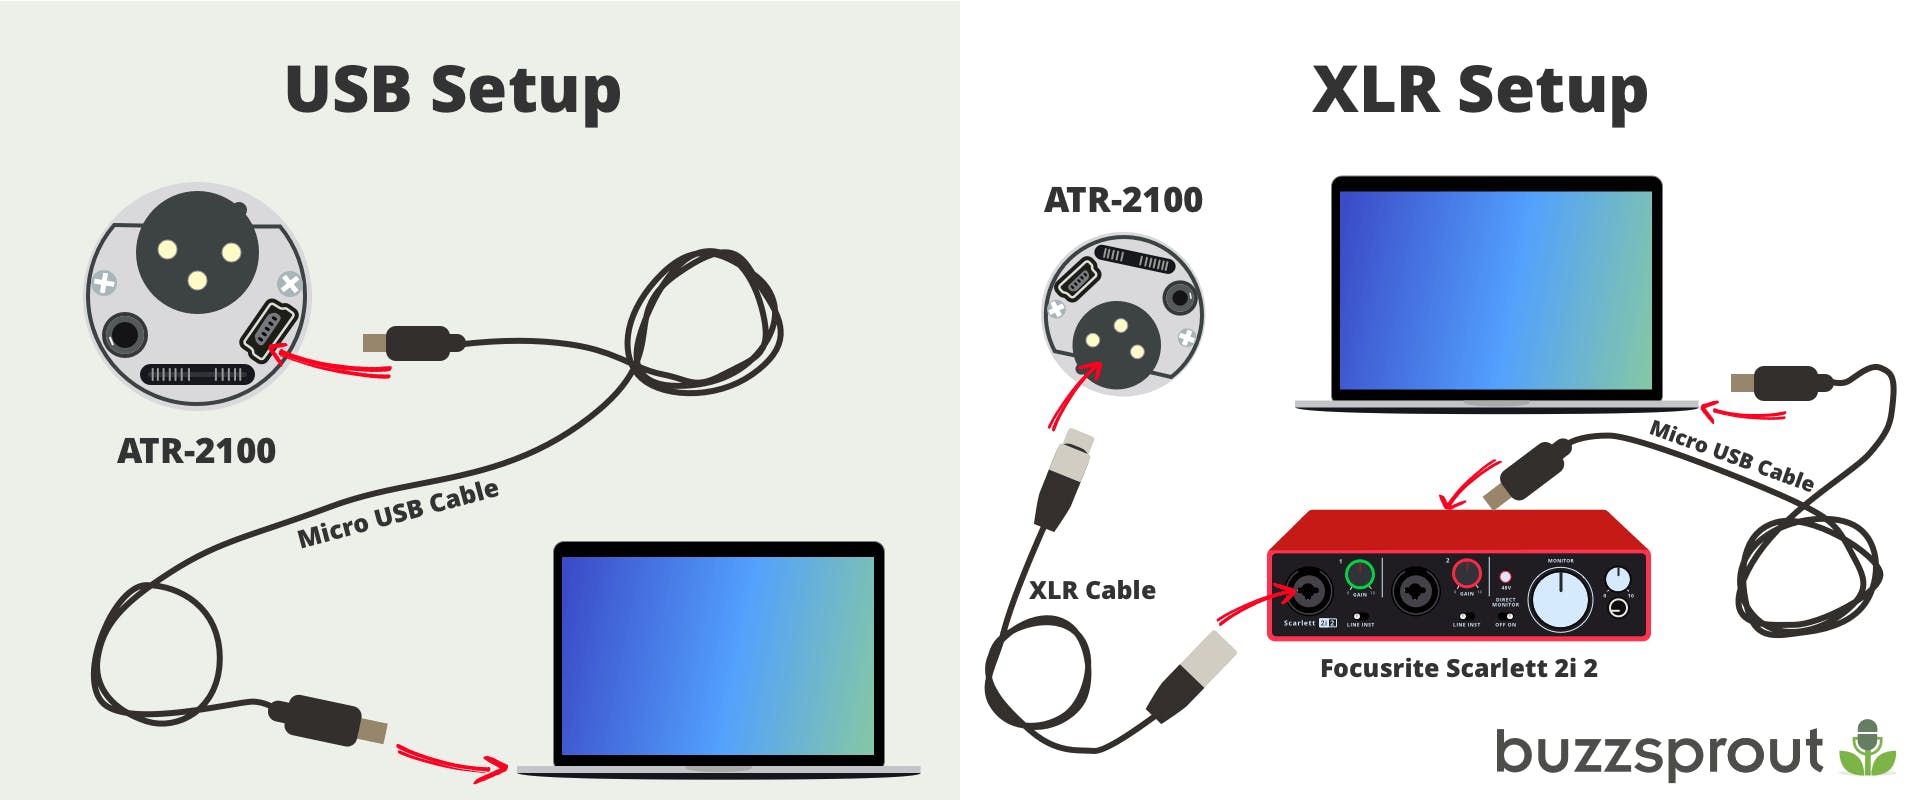 XLR vs USB Setup for podcasting